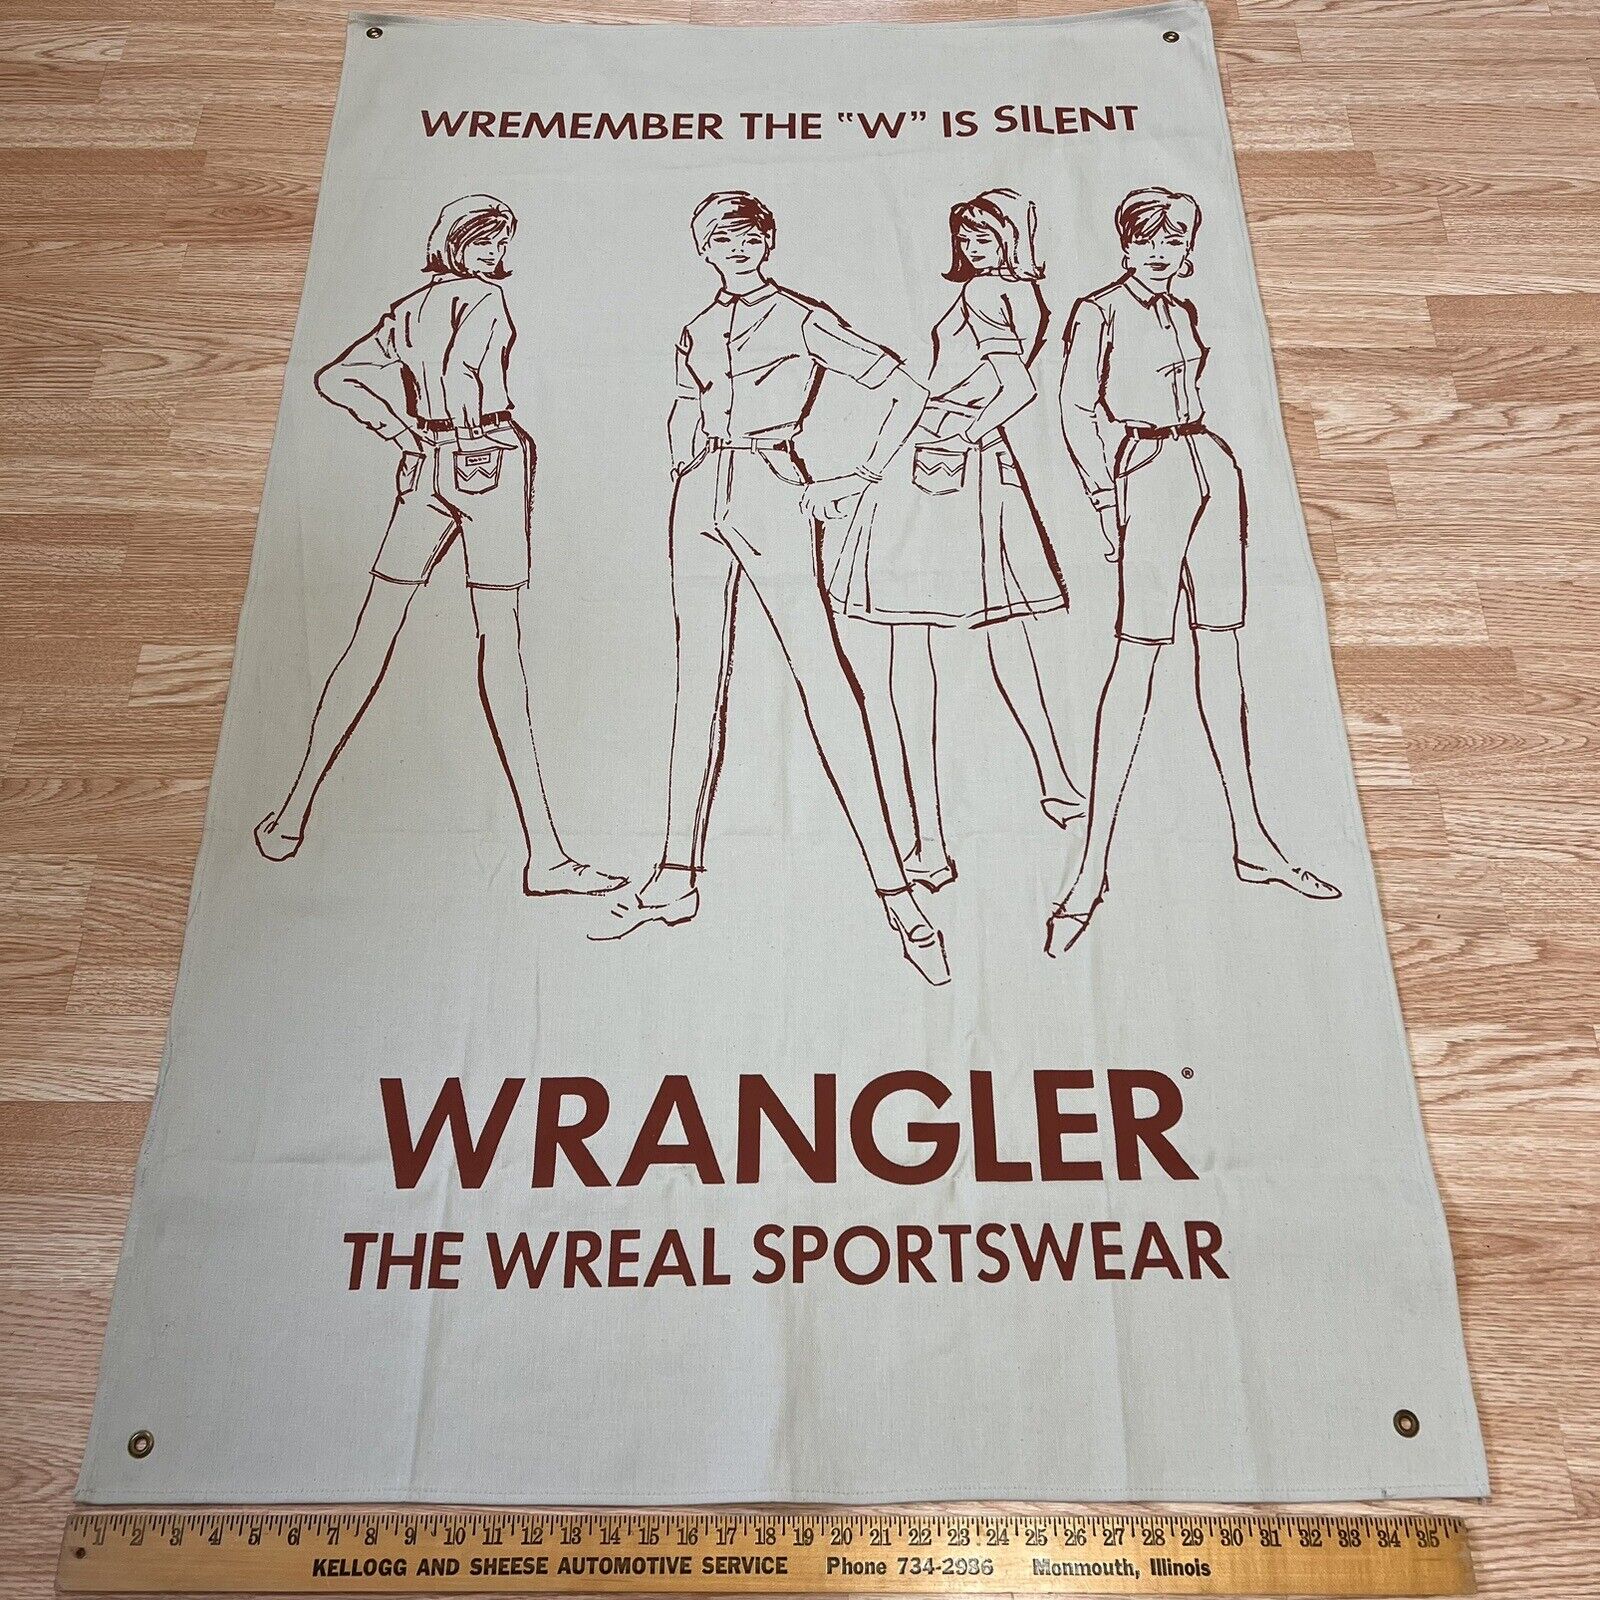 VTG 70s NOS Wrangler Jeans Wreal Sportswear Canvas Advertising Sign 59x37